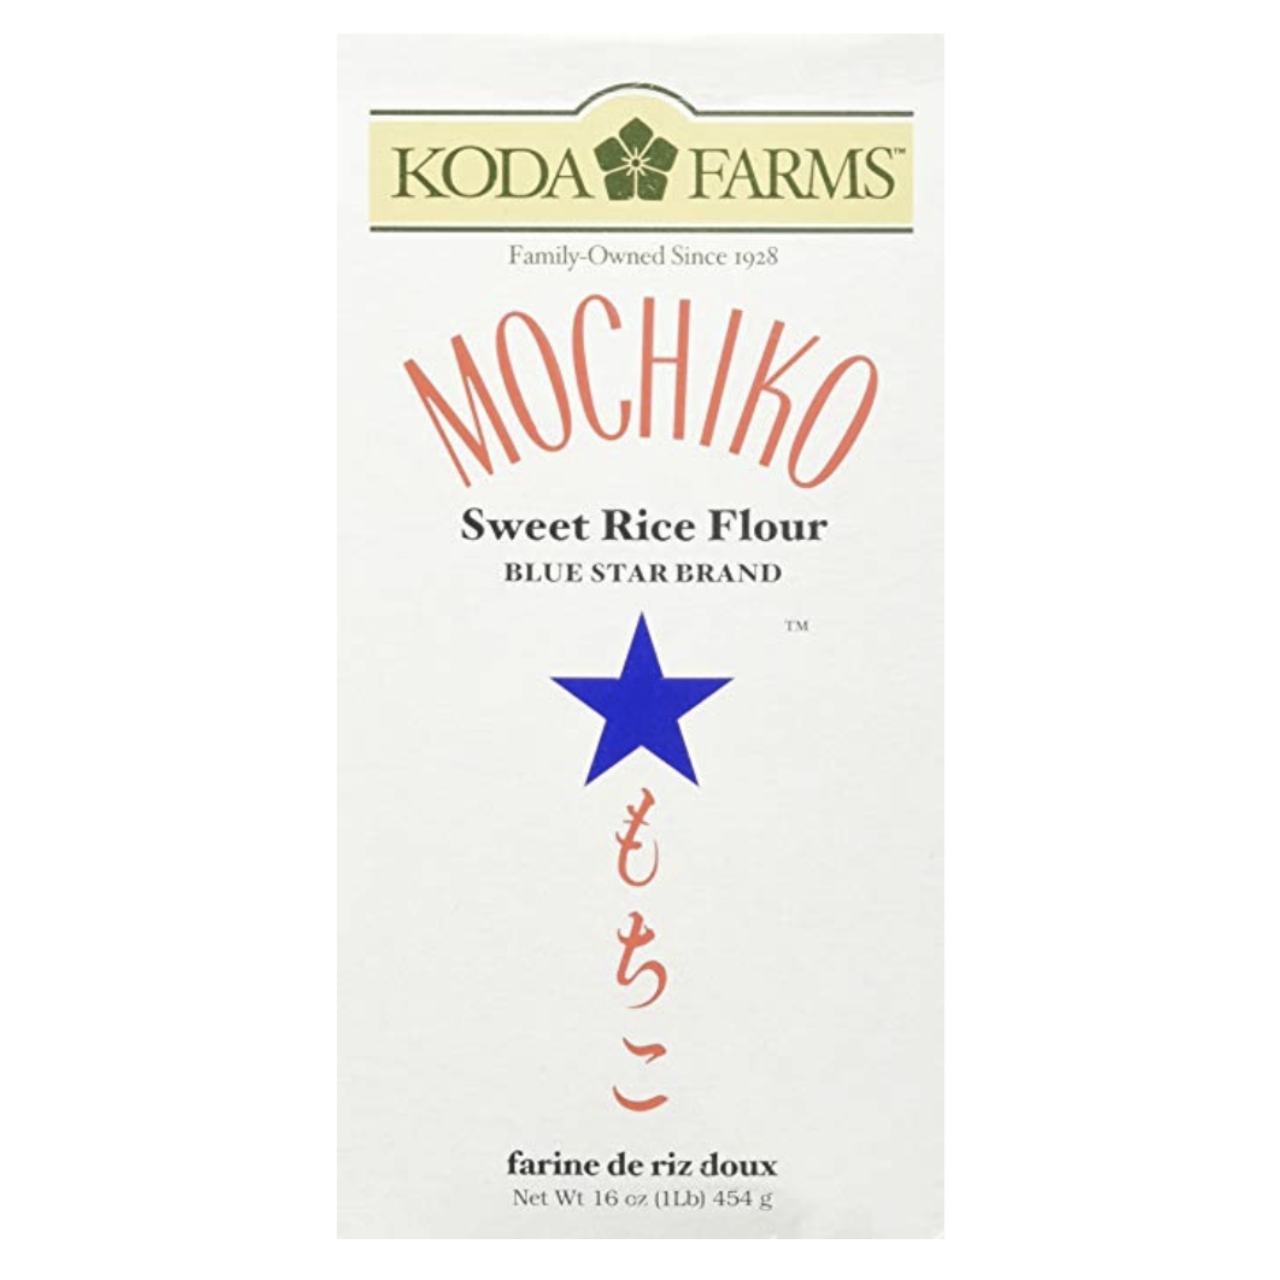 Mochiko - Sweet Rice Flour